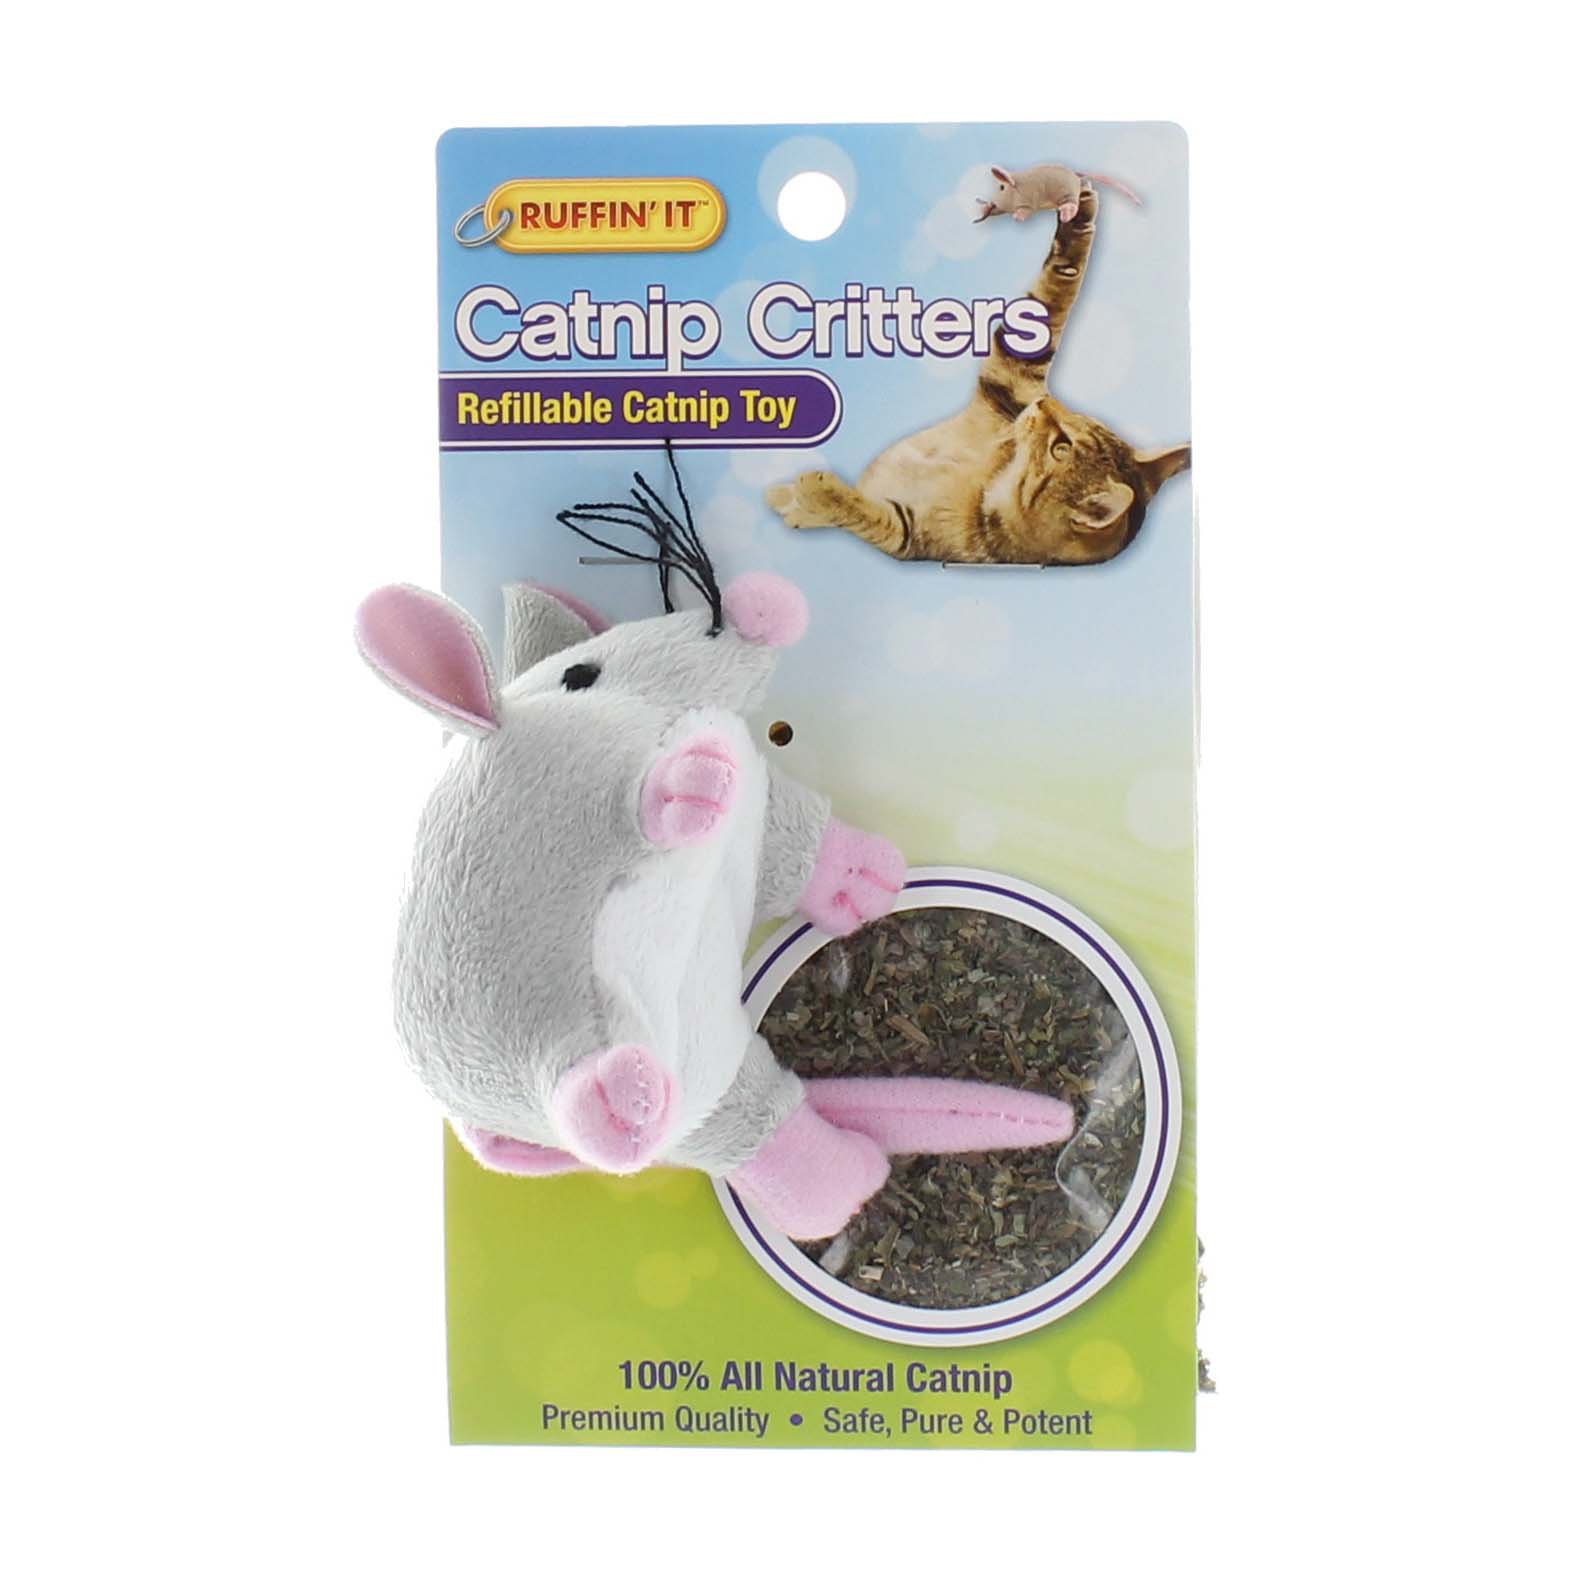 refillable catnip toy